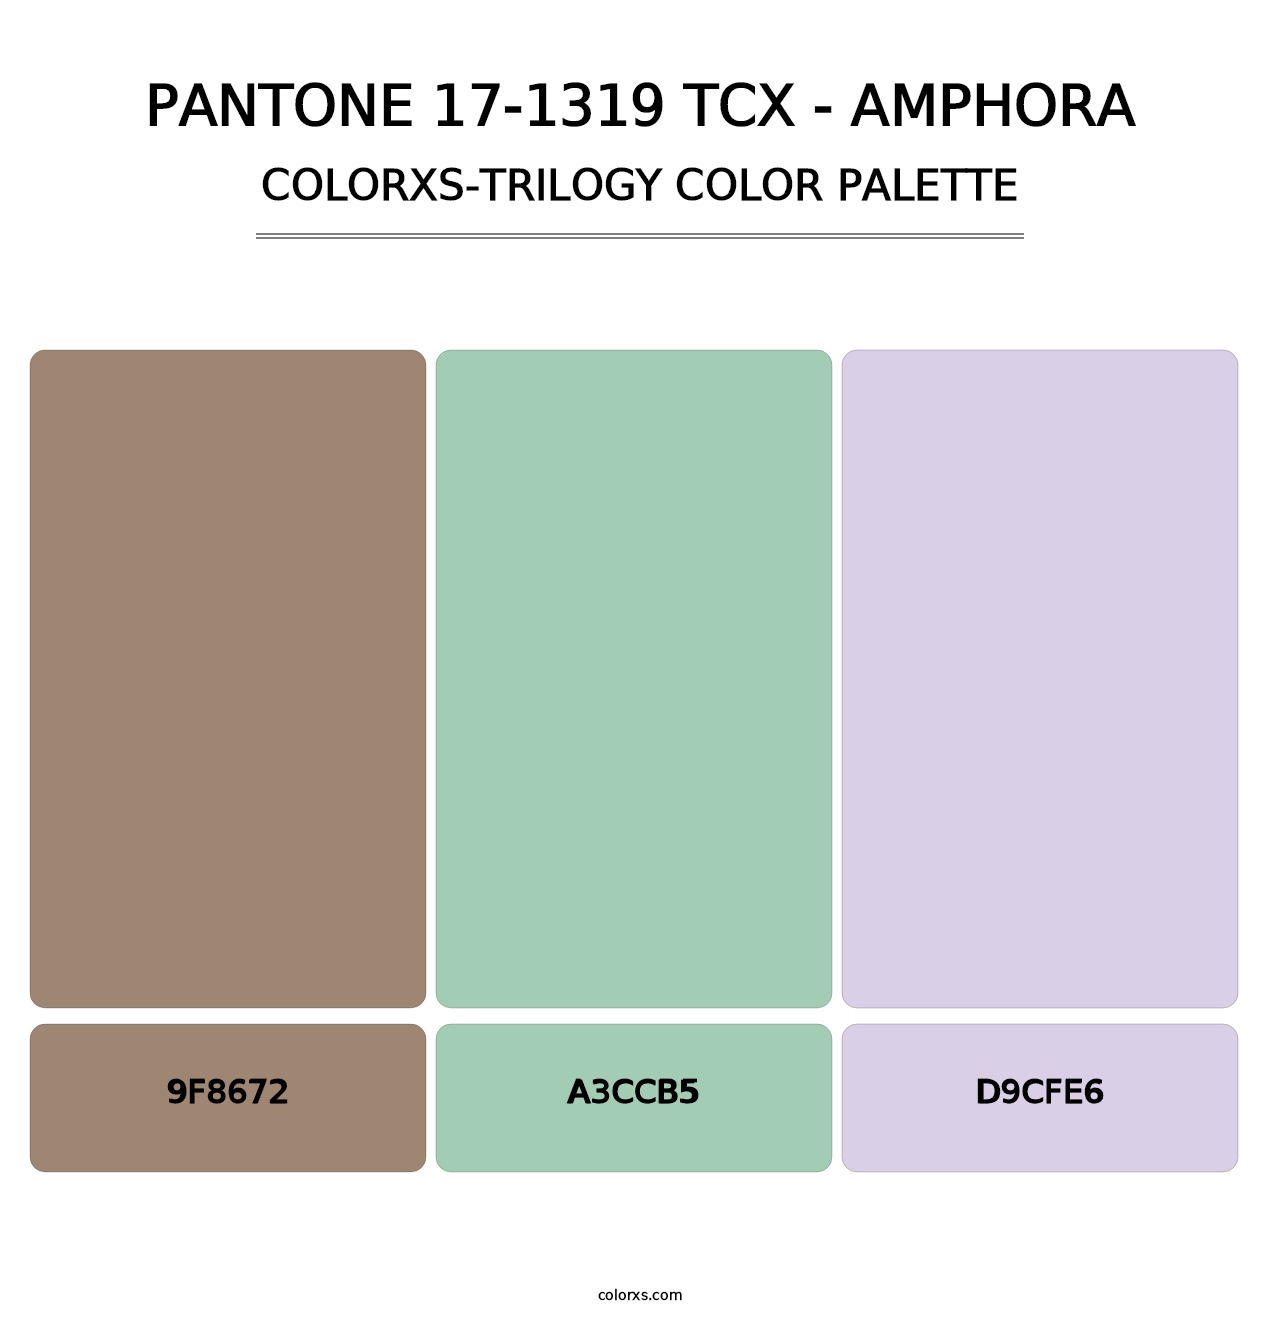 PANTONE 17-1319 TCX - Amphora - Colorxs Trilogy Palette